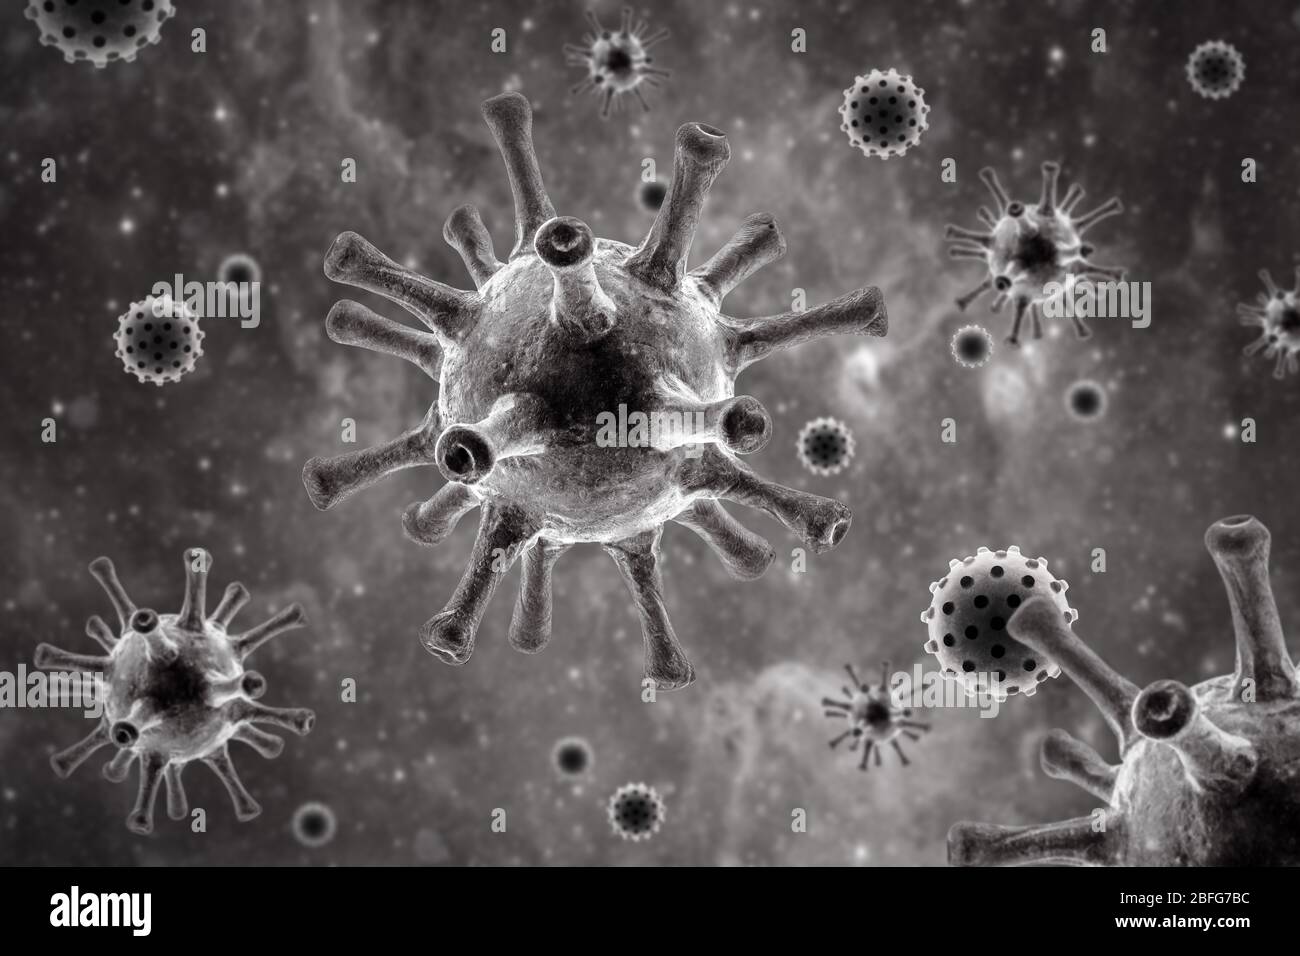 COVID-19 coronavirus or flu virus background, 3d illustration, microscopic view of SARS-CoV-2 corona virus in cell. Concept of science virology, COVID Stock Photo